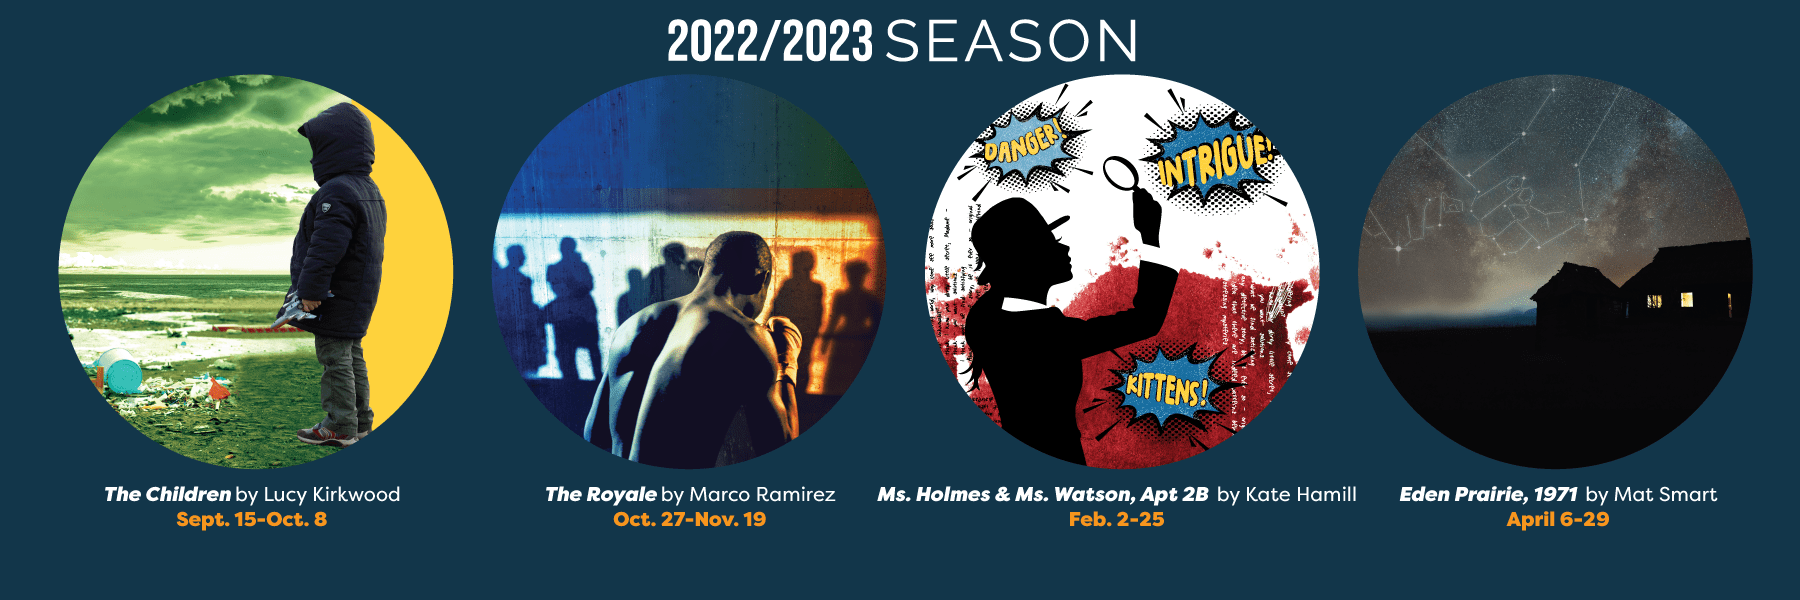 2022-2023 Season